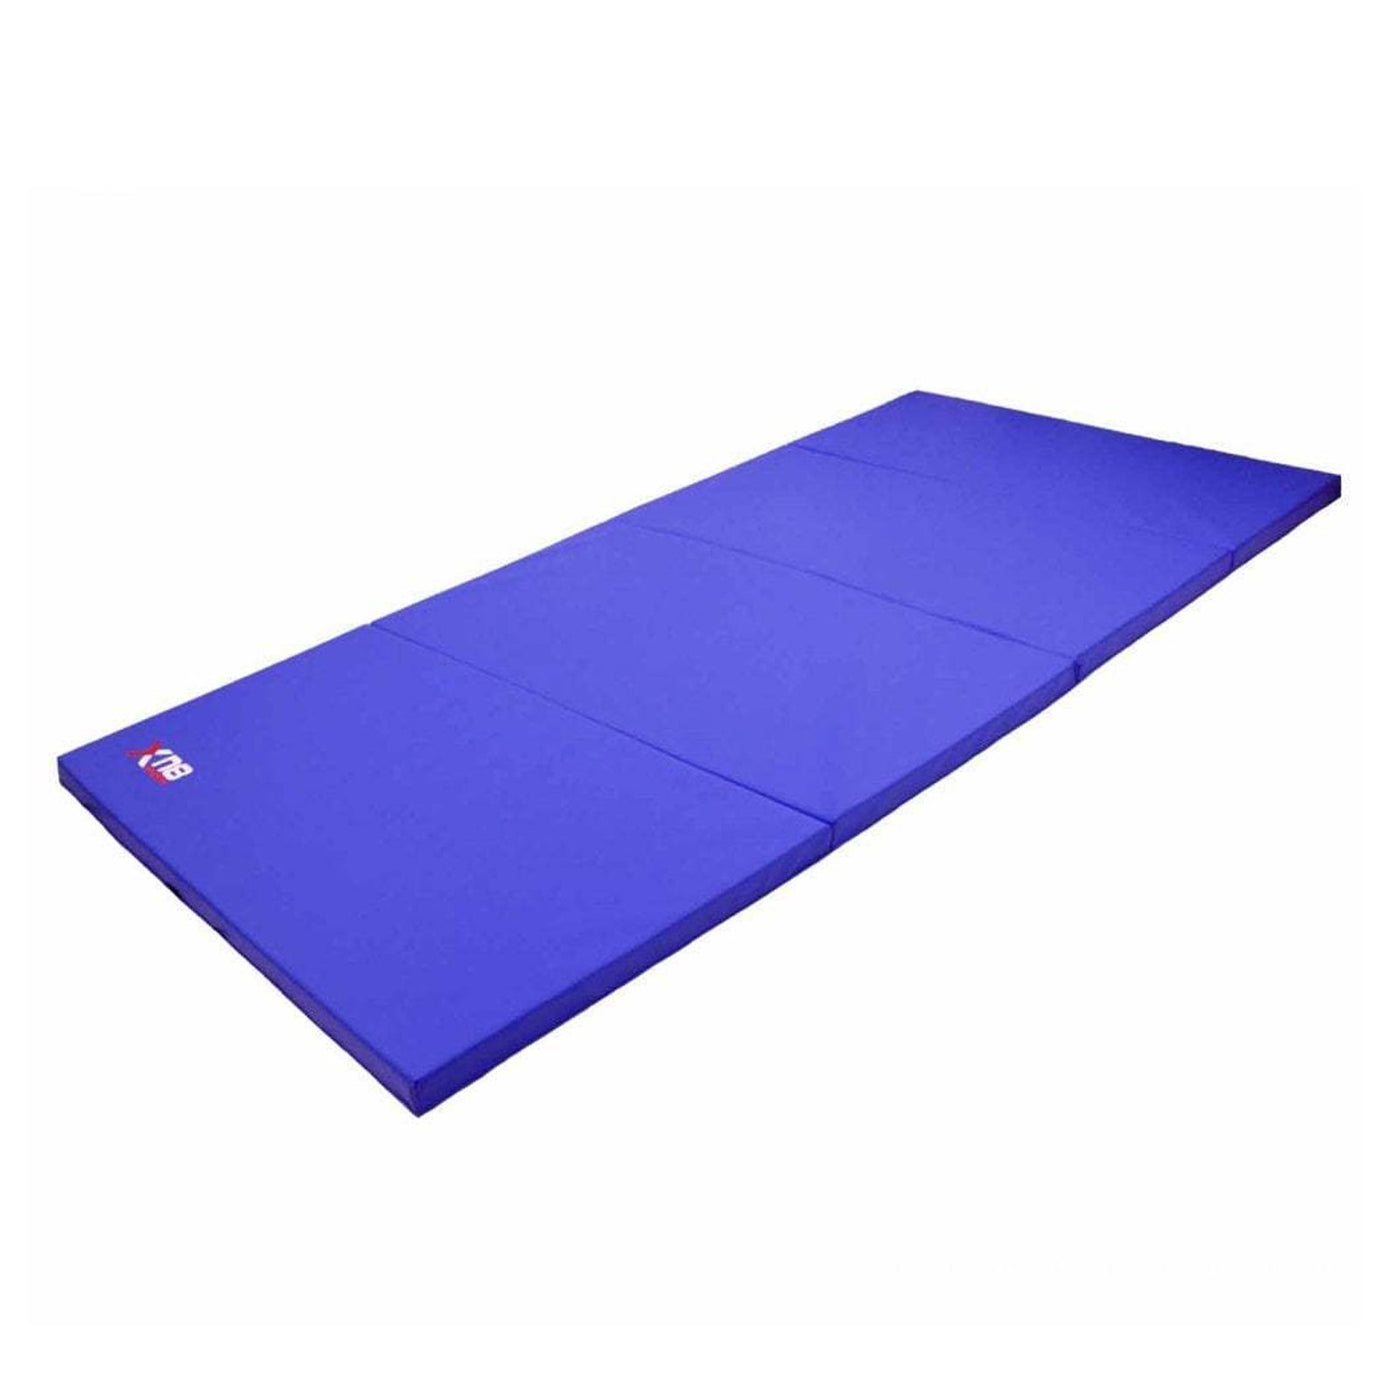 Xn8 Sports Gymnastic Mat Blue